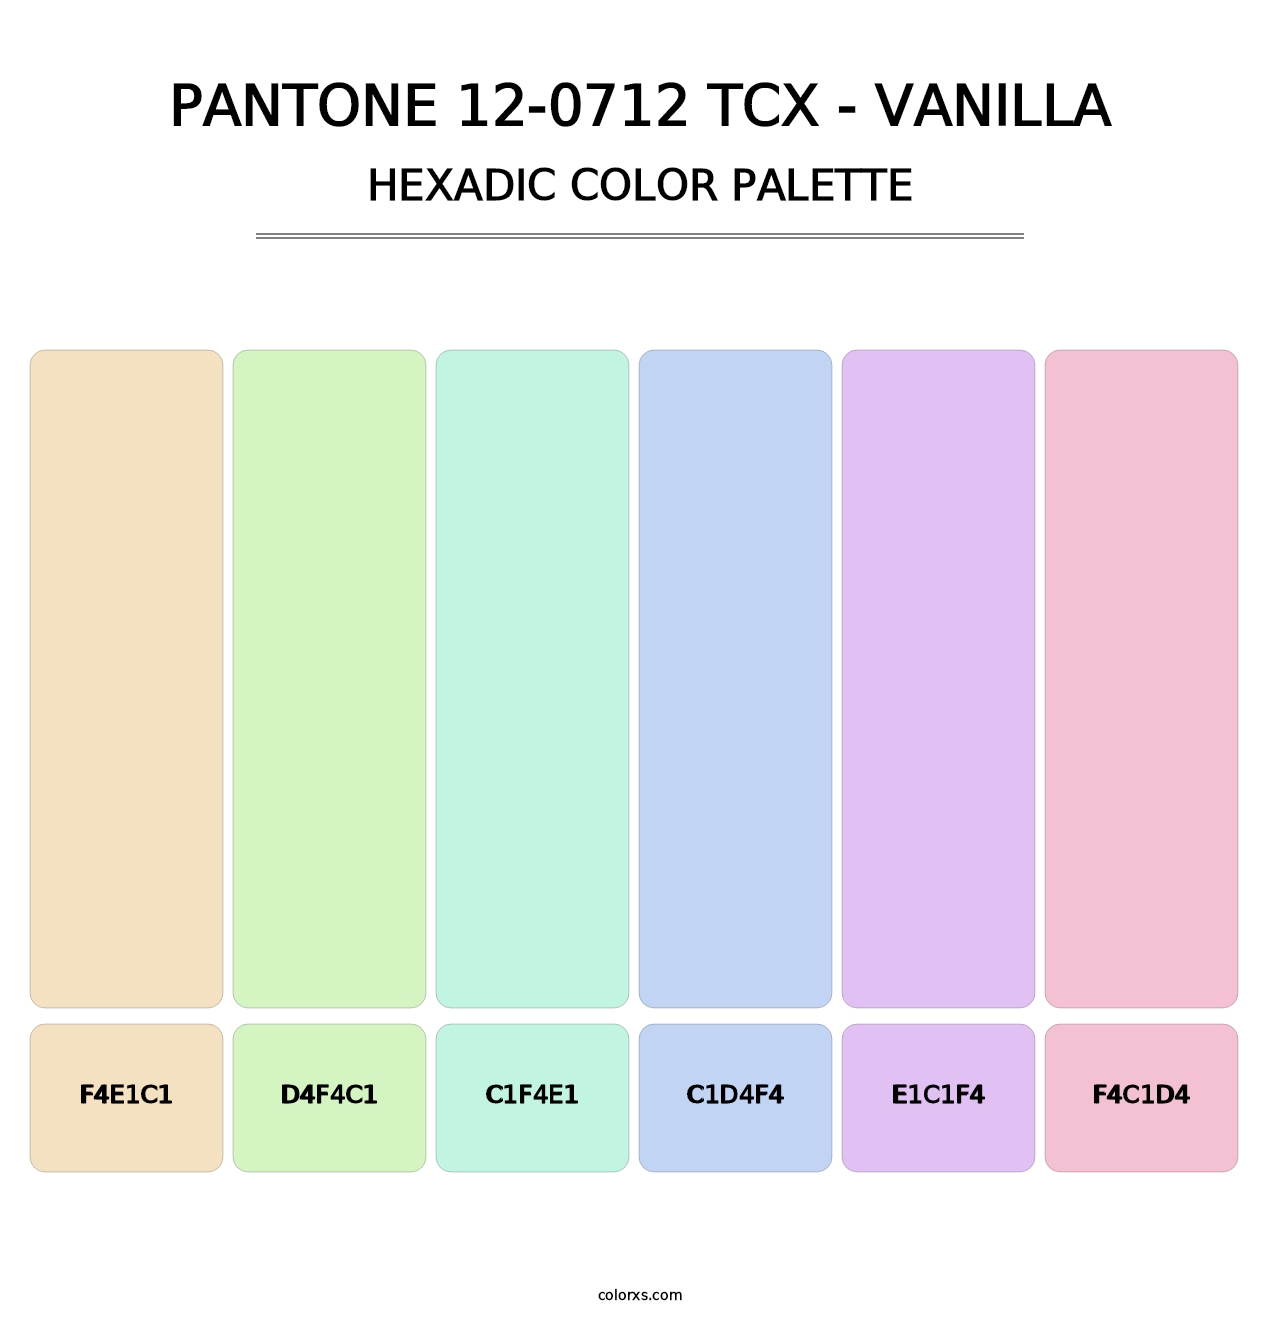 PANTONE 12-0712 TCX - Vanilla - Hexadic Color Palette